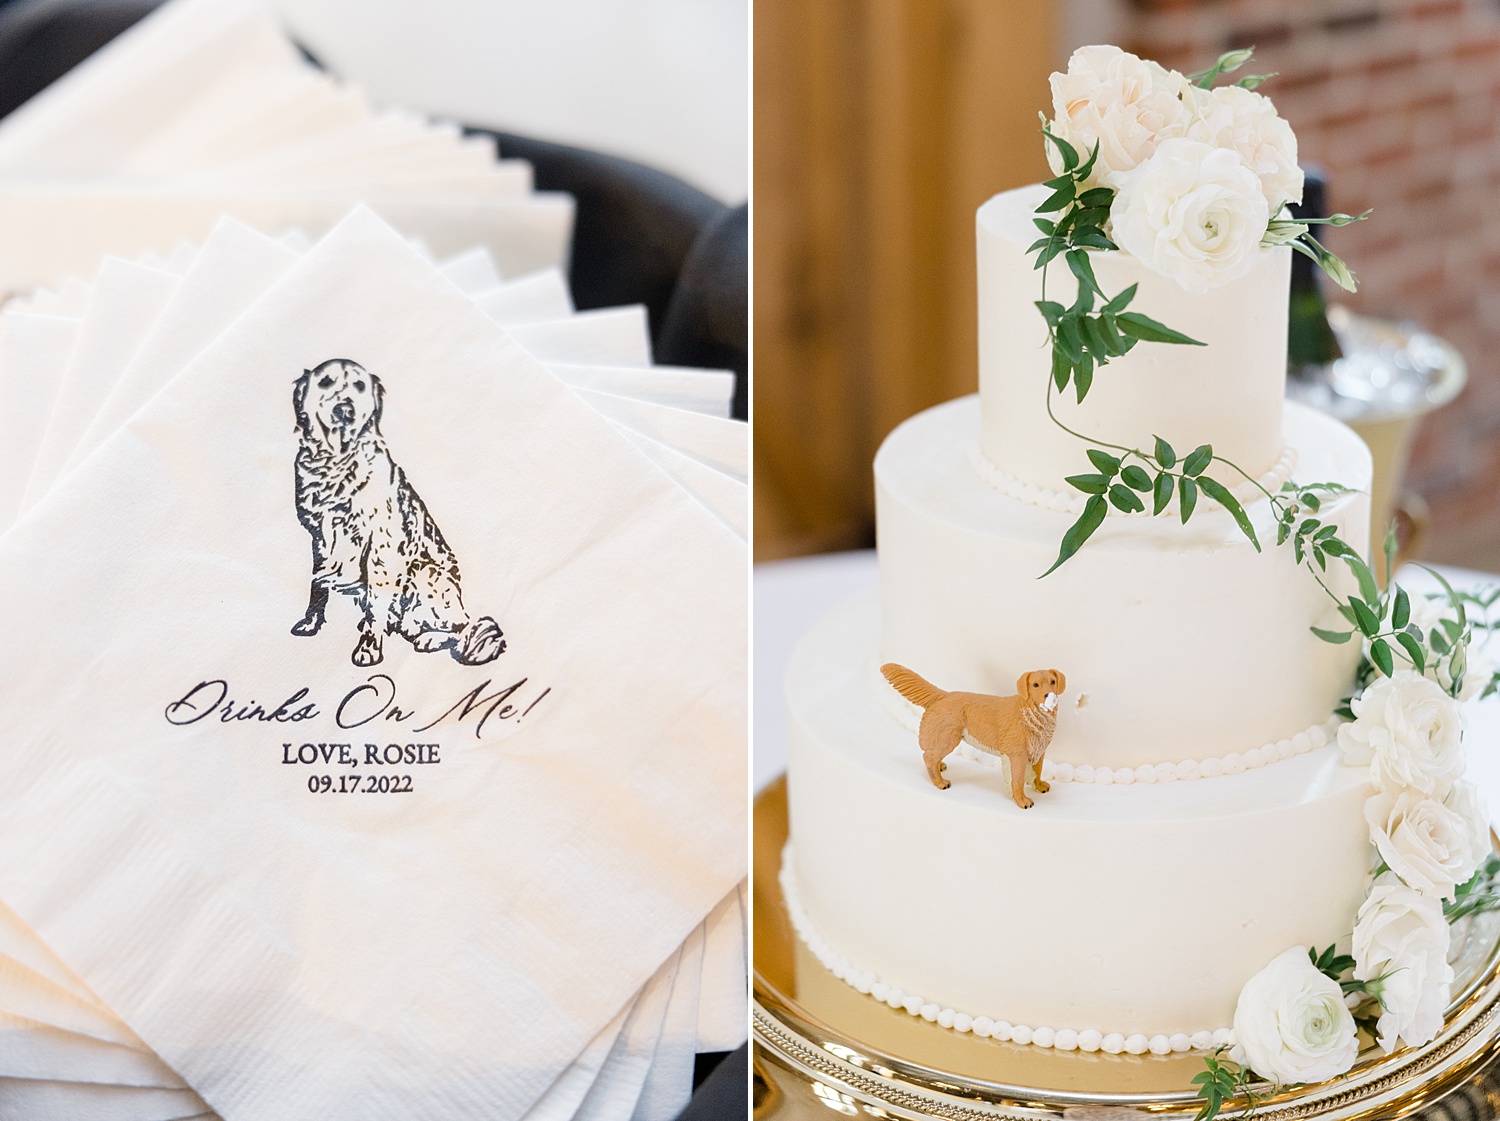 wedding cake with dog figurine and custom napkins 